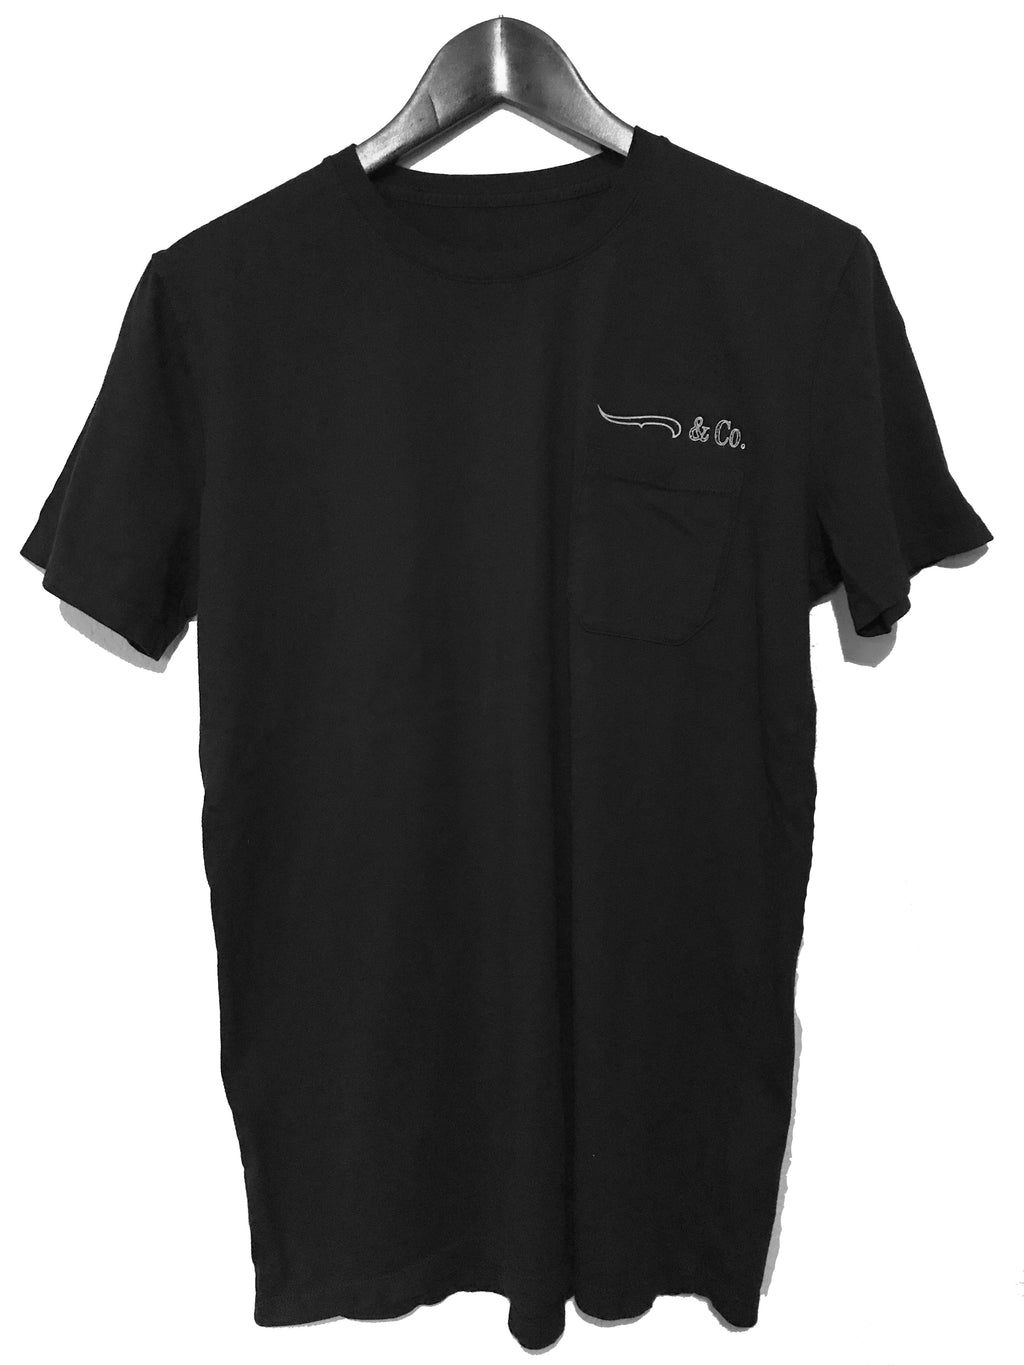 Company Shirts '17 | Lot 1 - Black